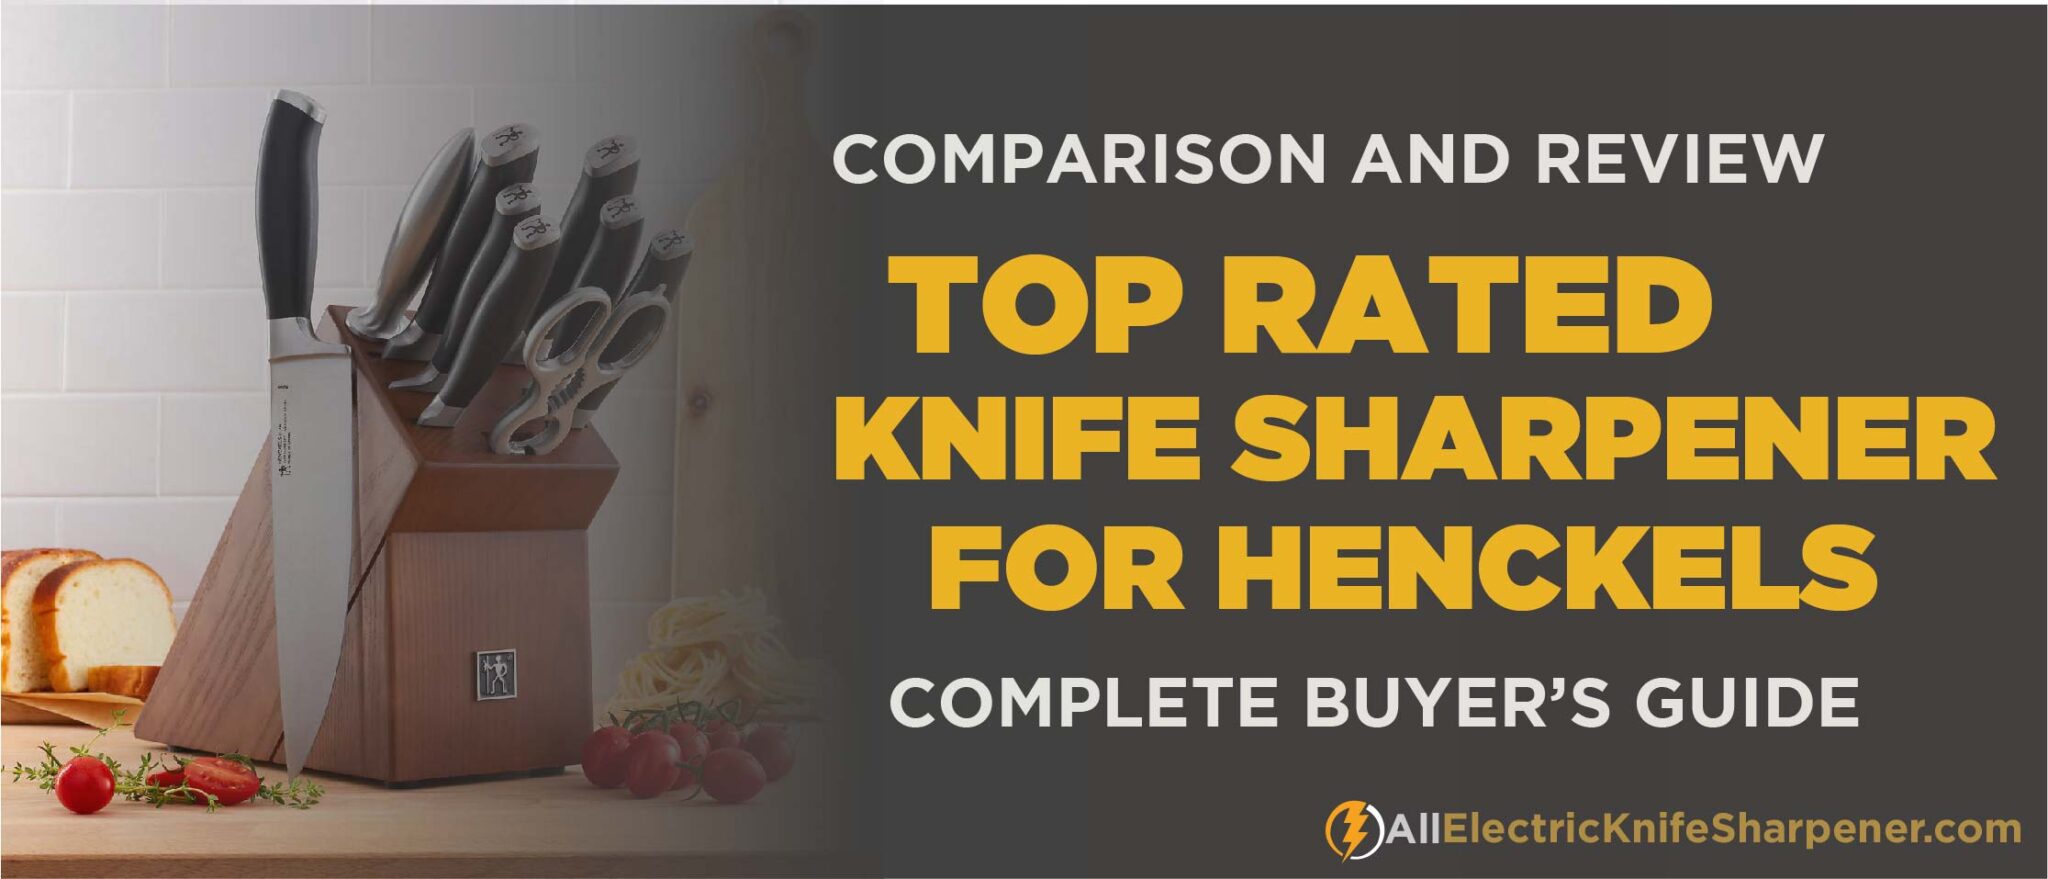 Best Electric knife sharpener For Henckels - A Complete User Guide & Reviews